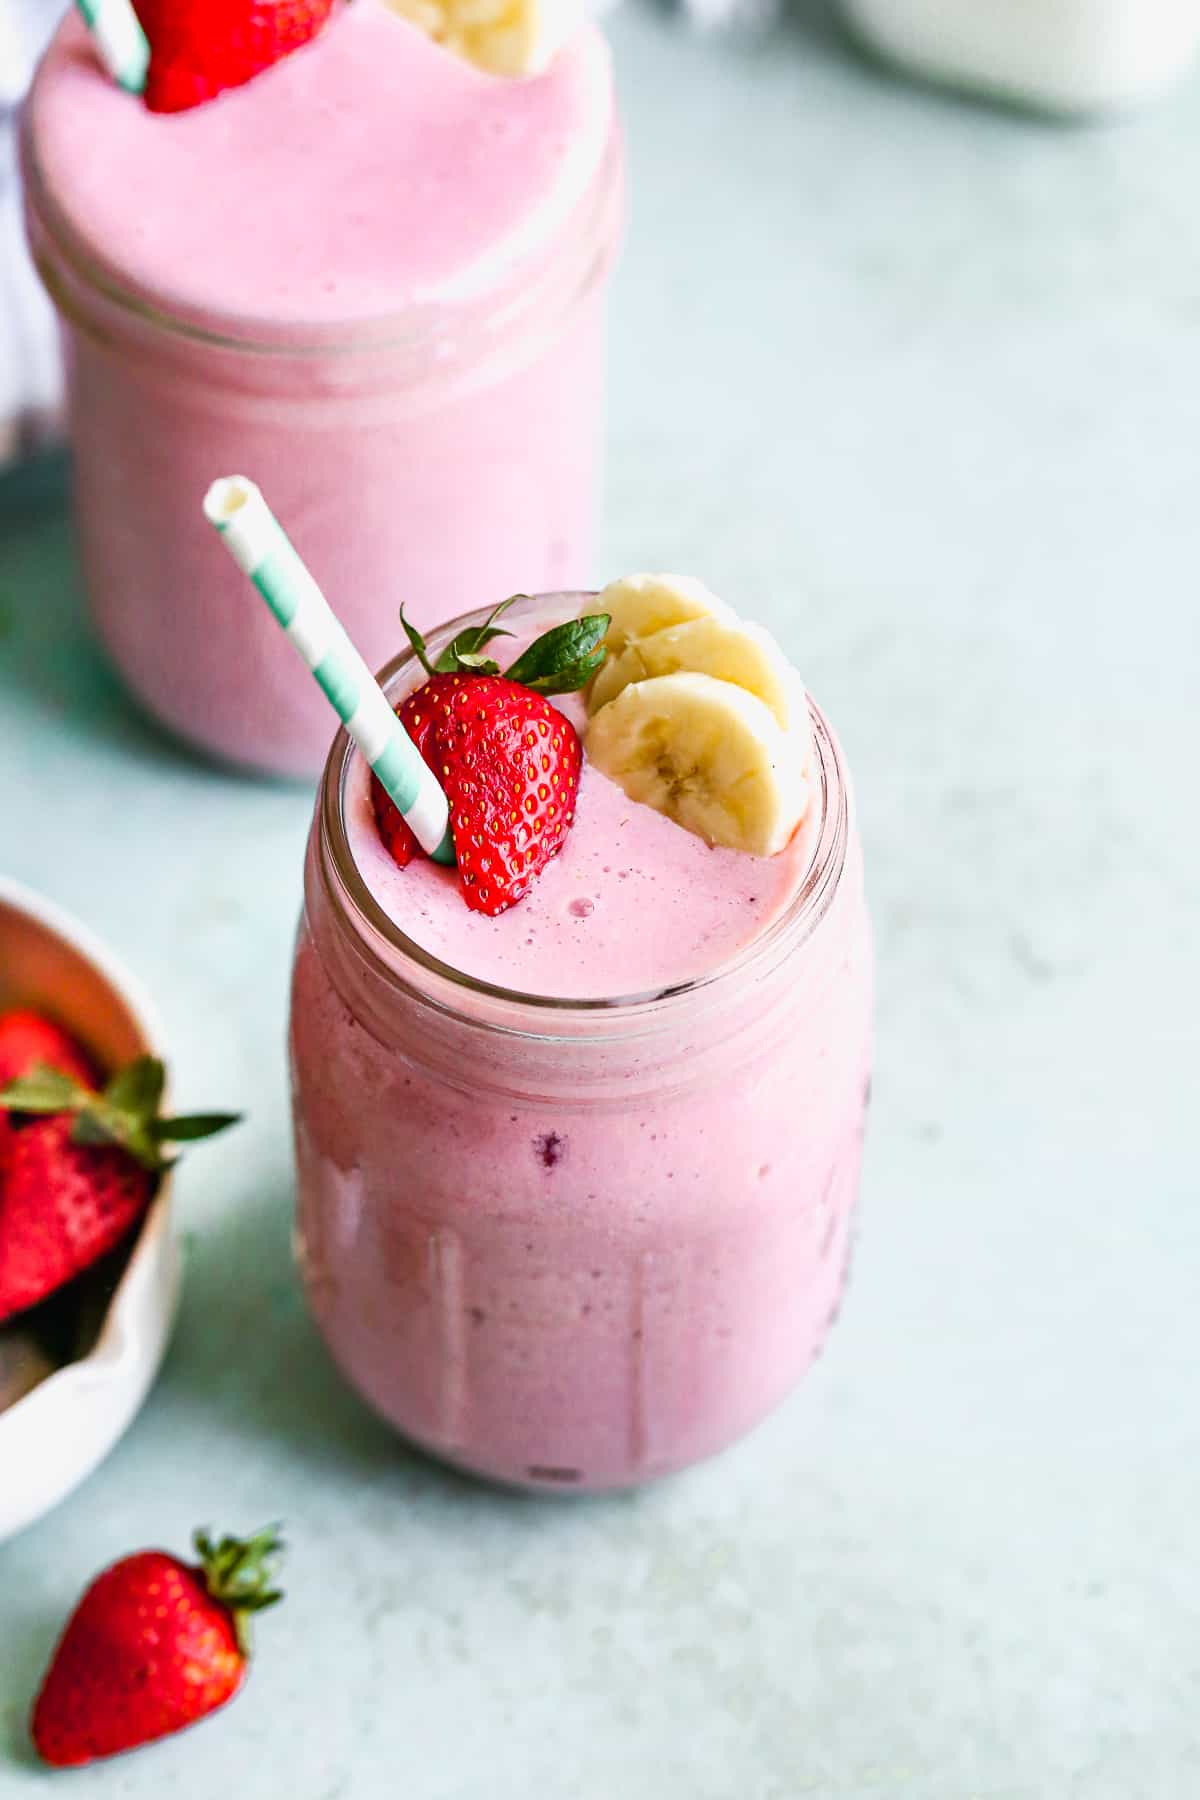 The best strawberry banana smoothie recipe with a strawberry, banana slices, and a straw ready to enjoy.